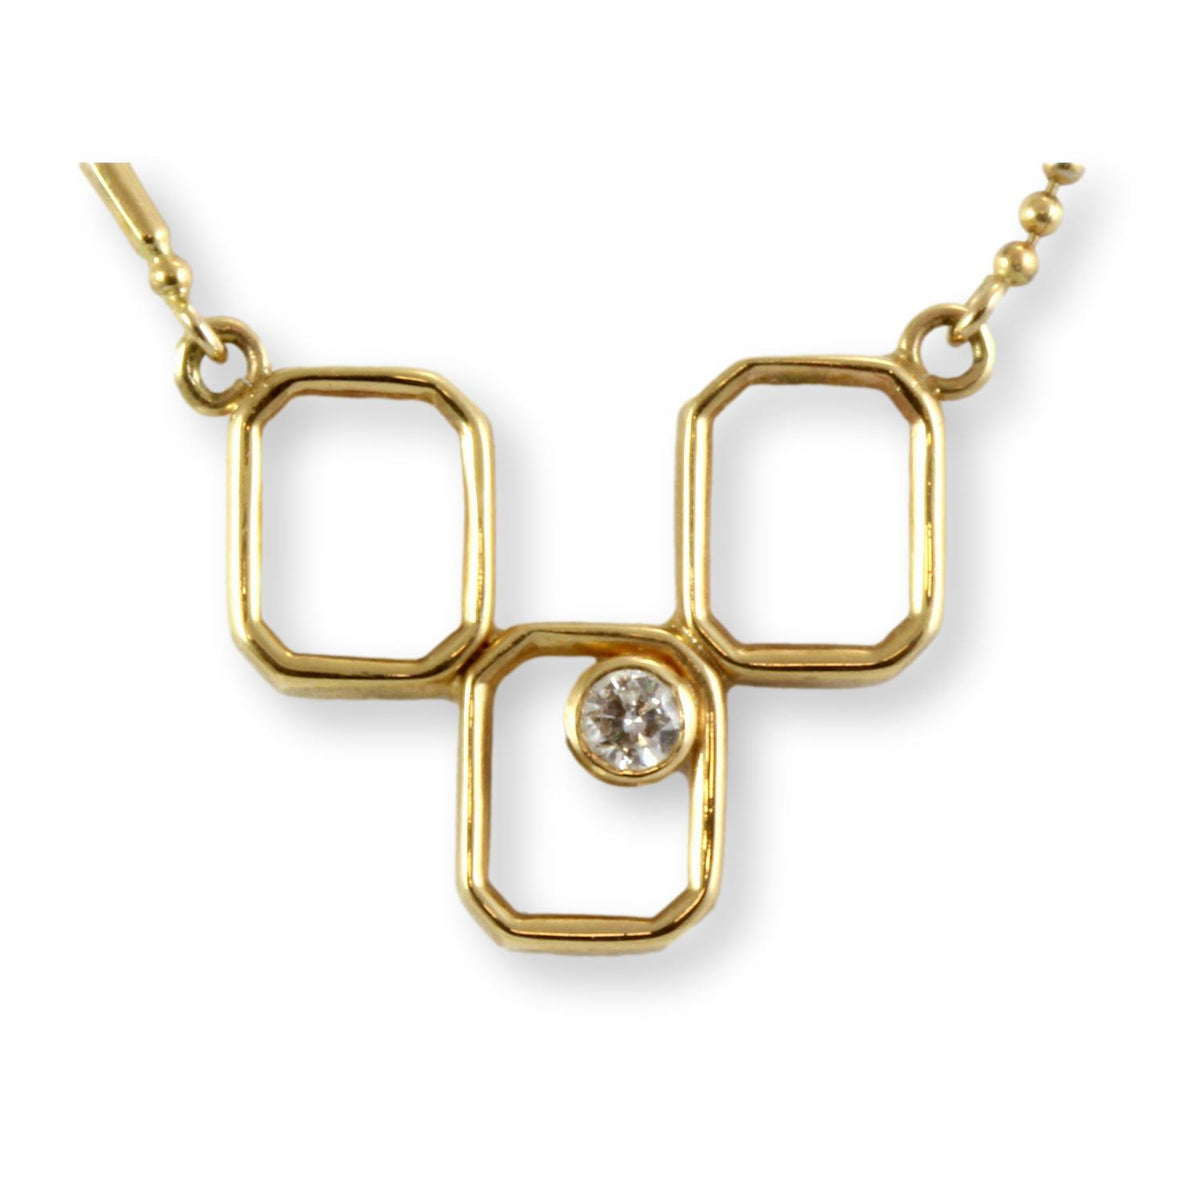 .16ct Diamond 14K Geometric Honeycomb Design Pendant Necklace